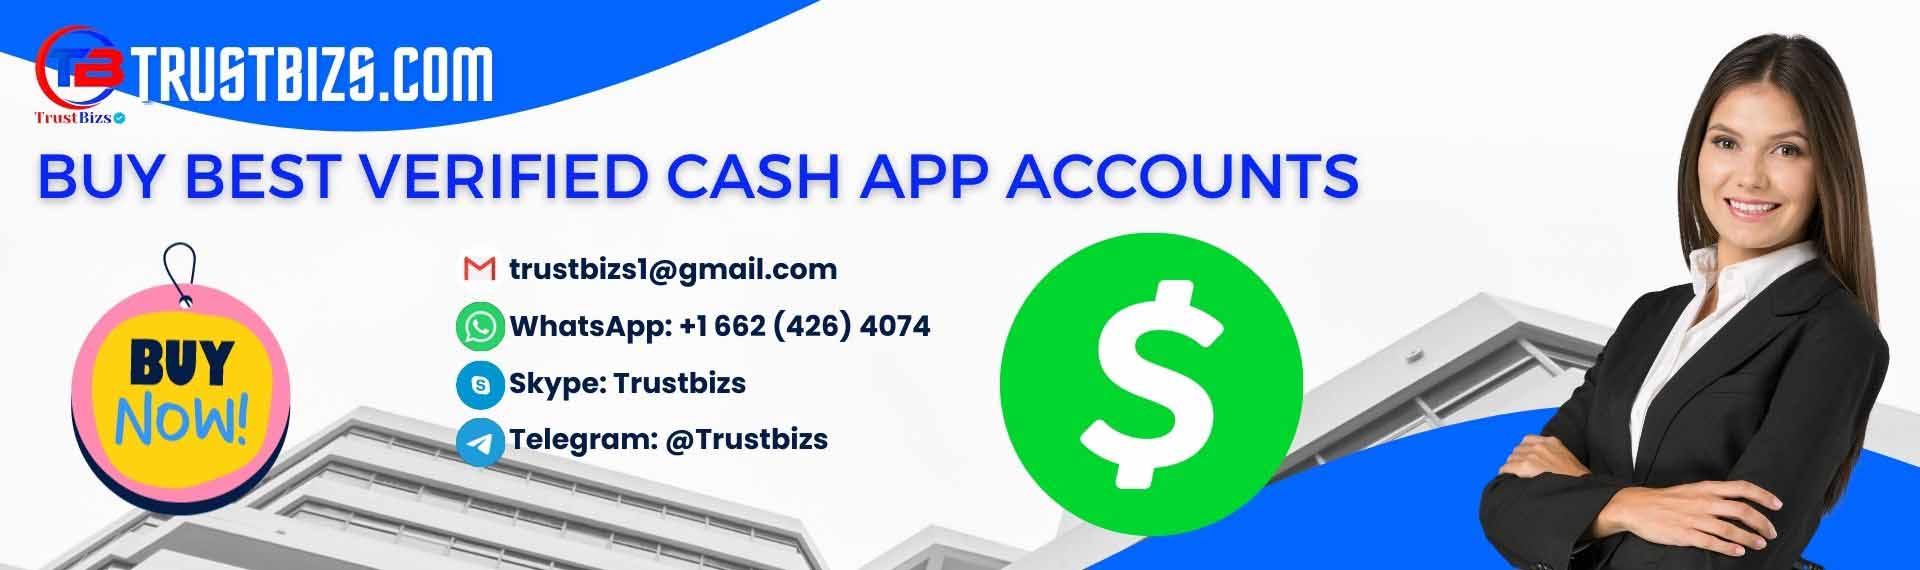 Buy Verified Cash App Account 01